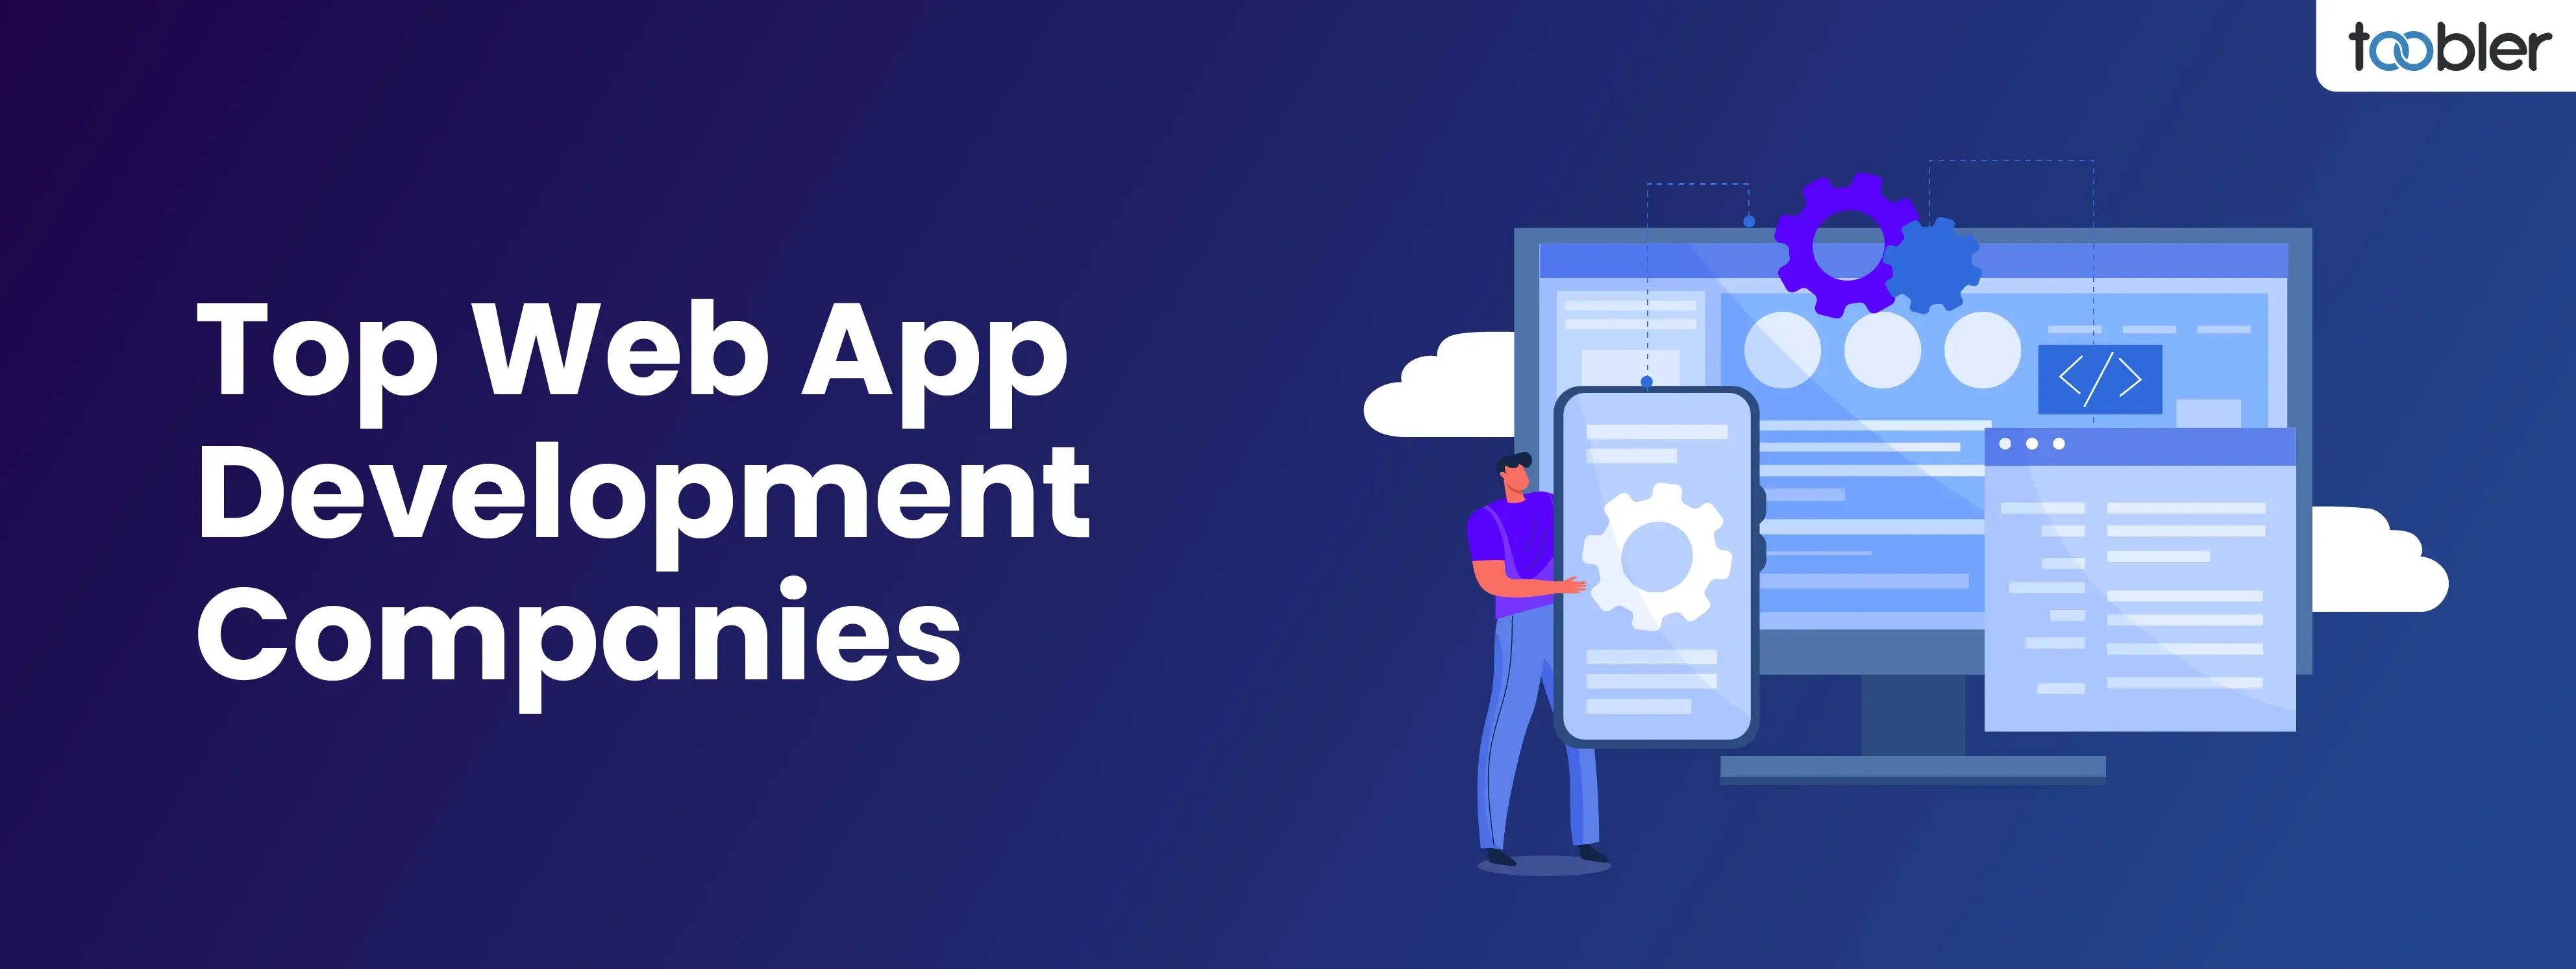 11 Top Web App Development Companies [Updated List]